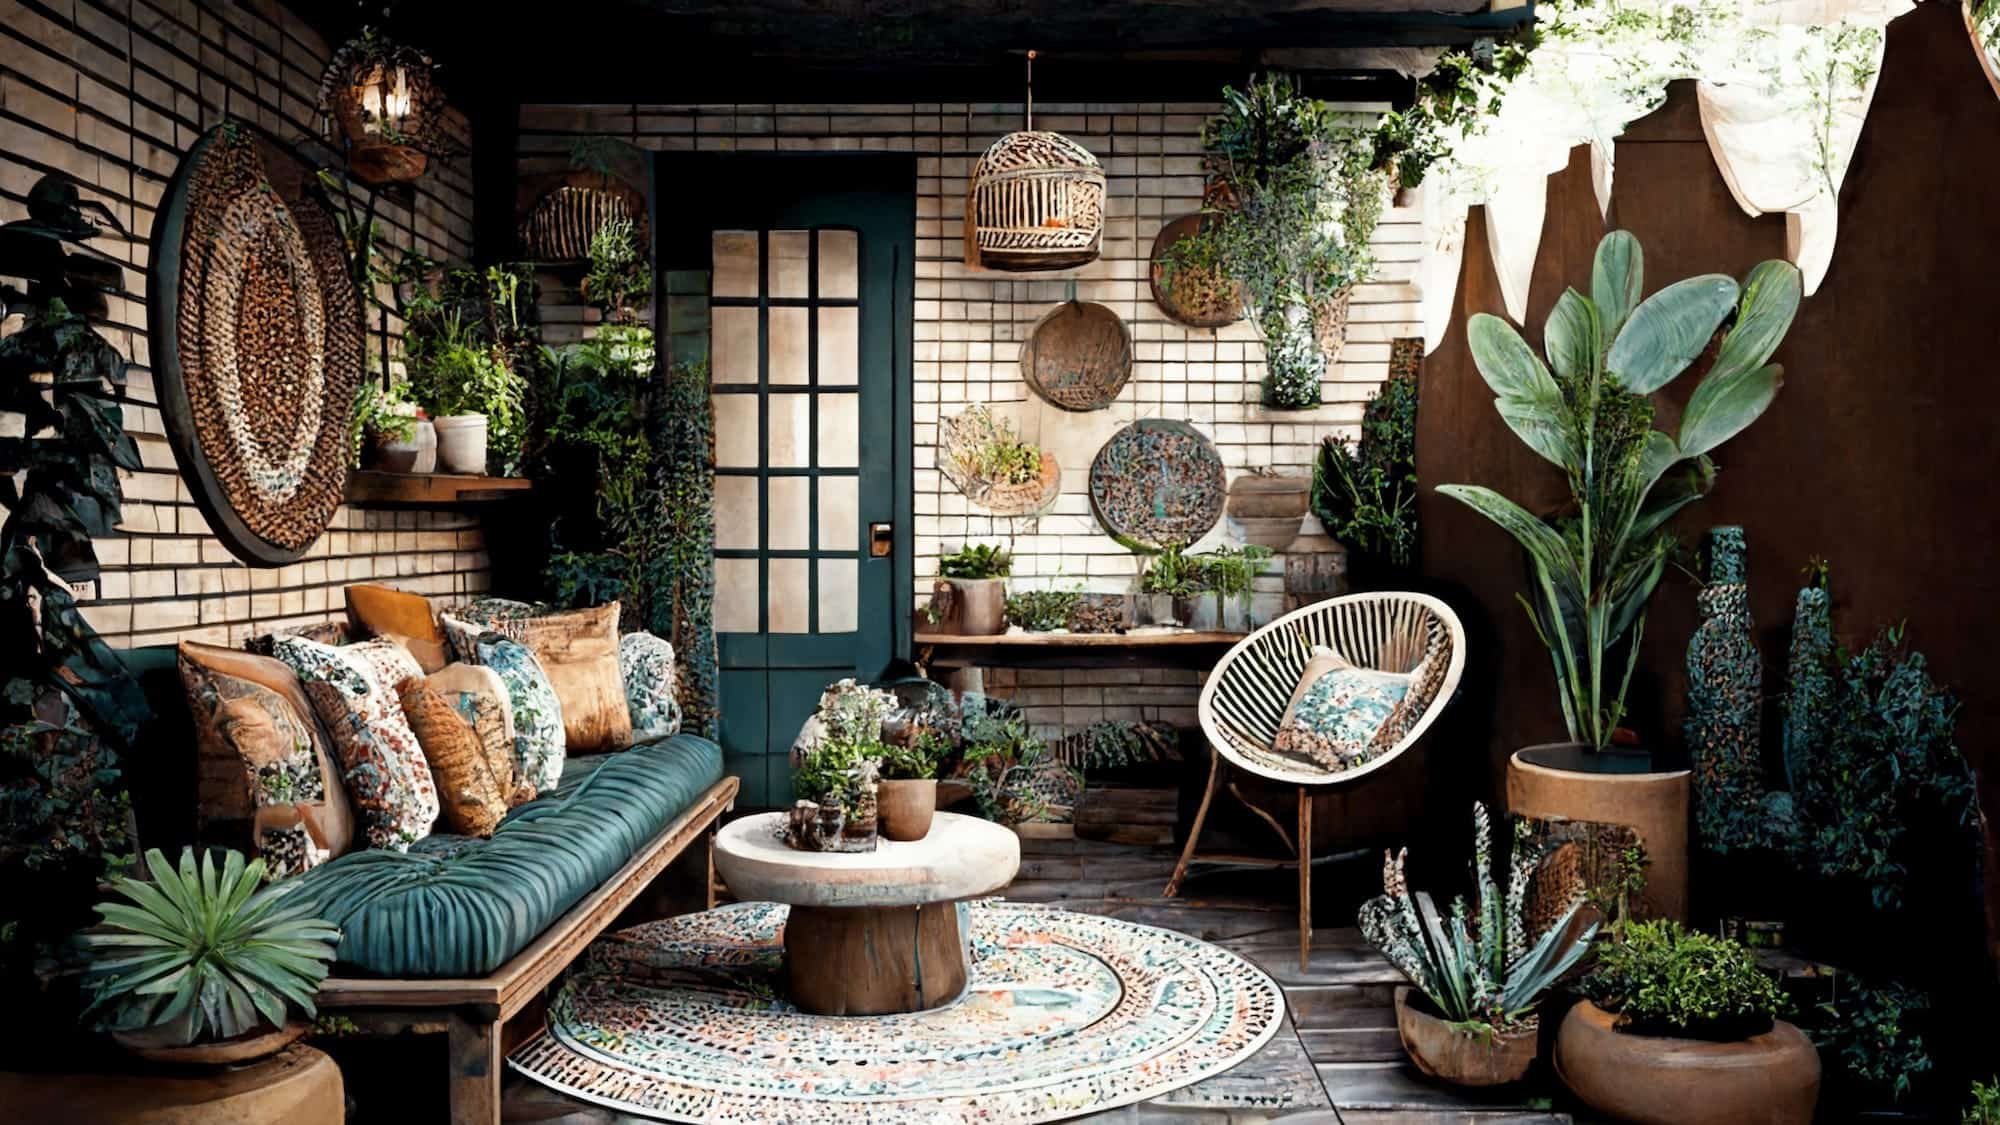 Bohemian garden style image